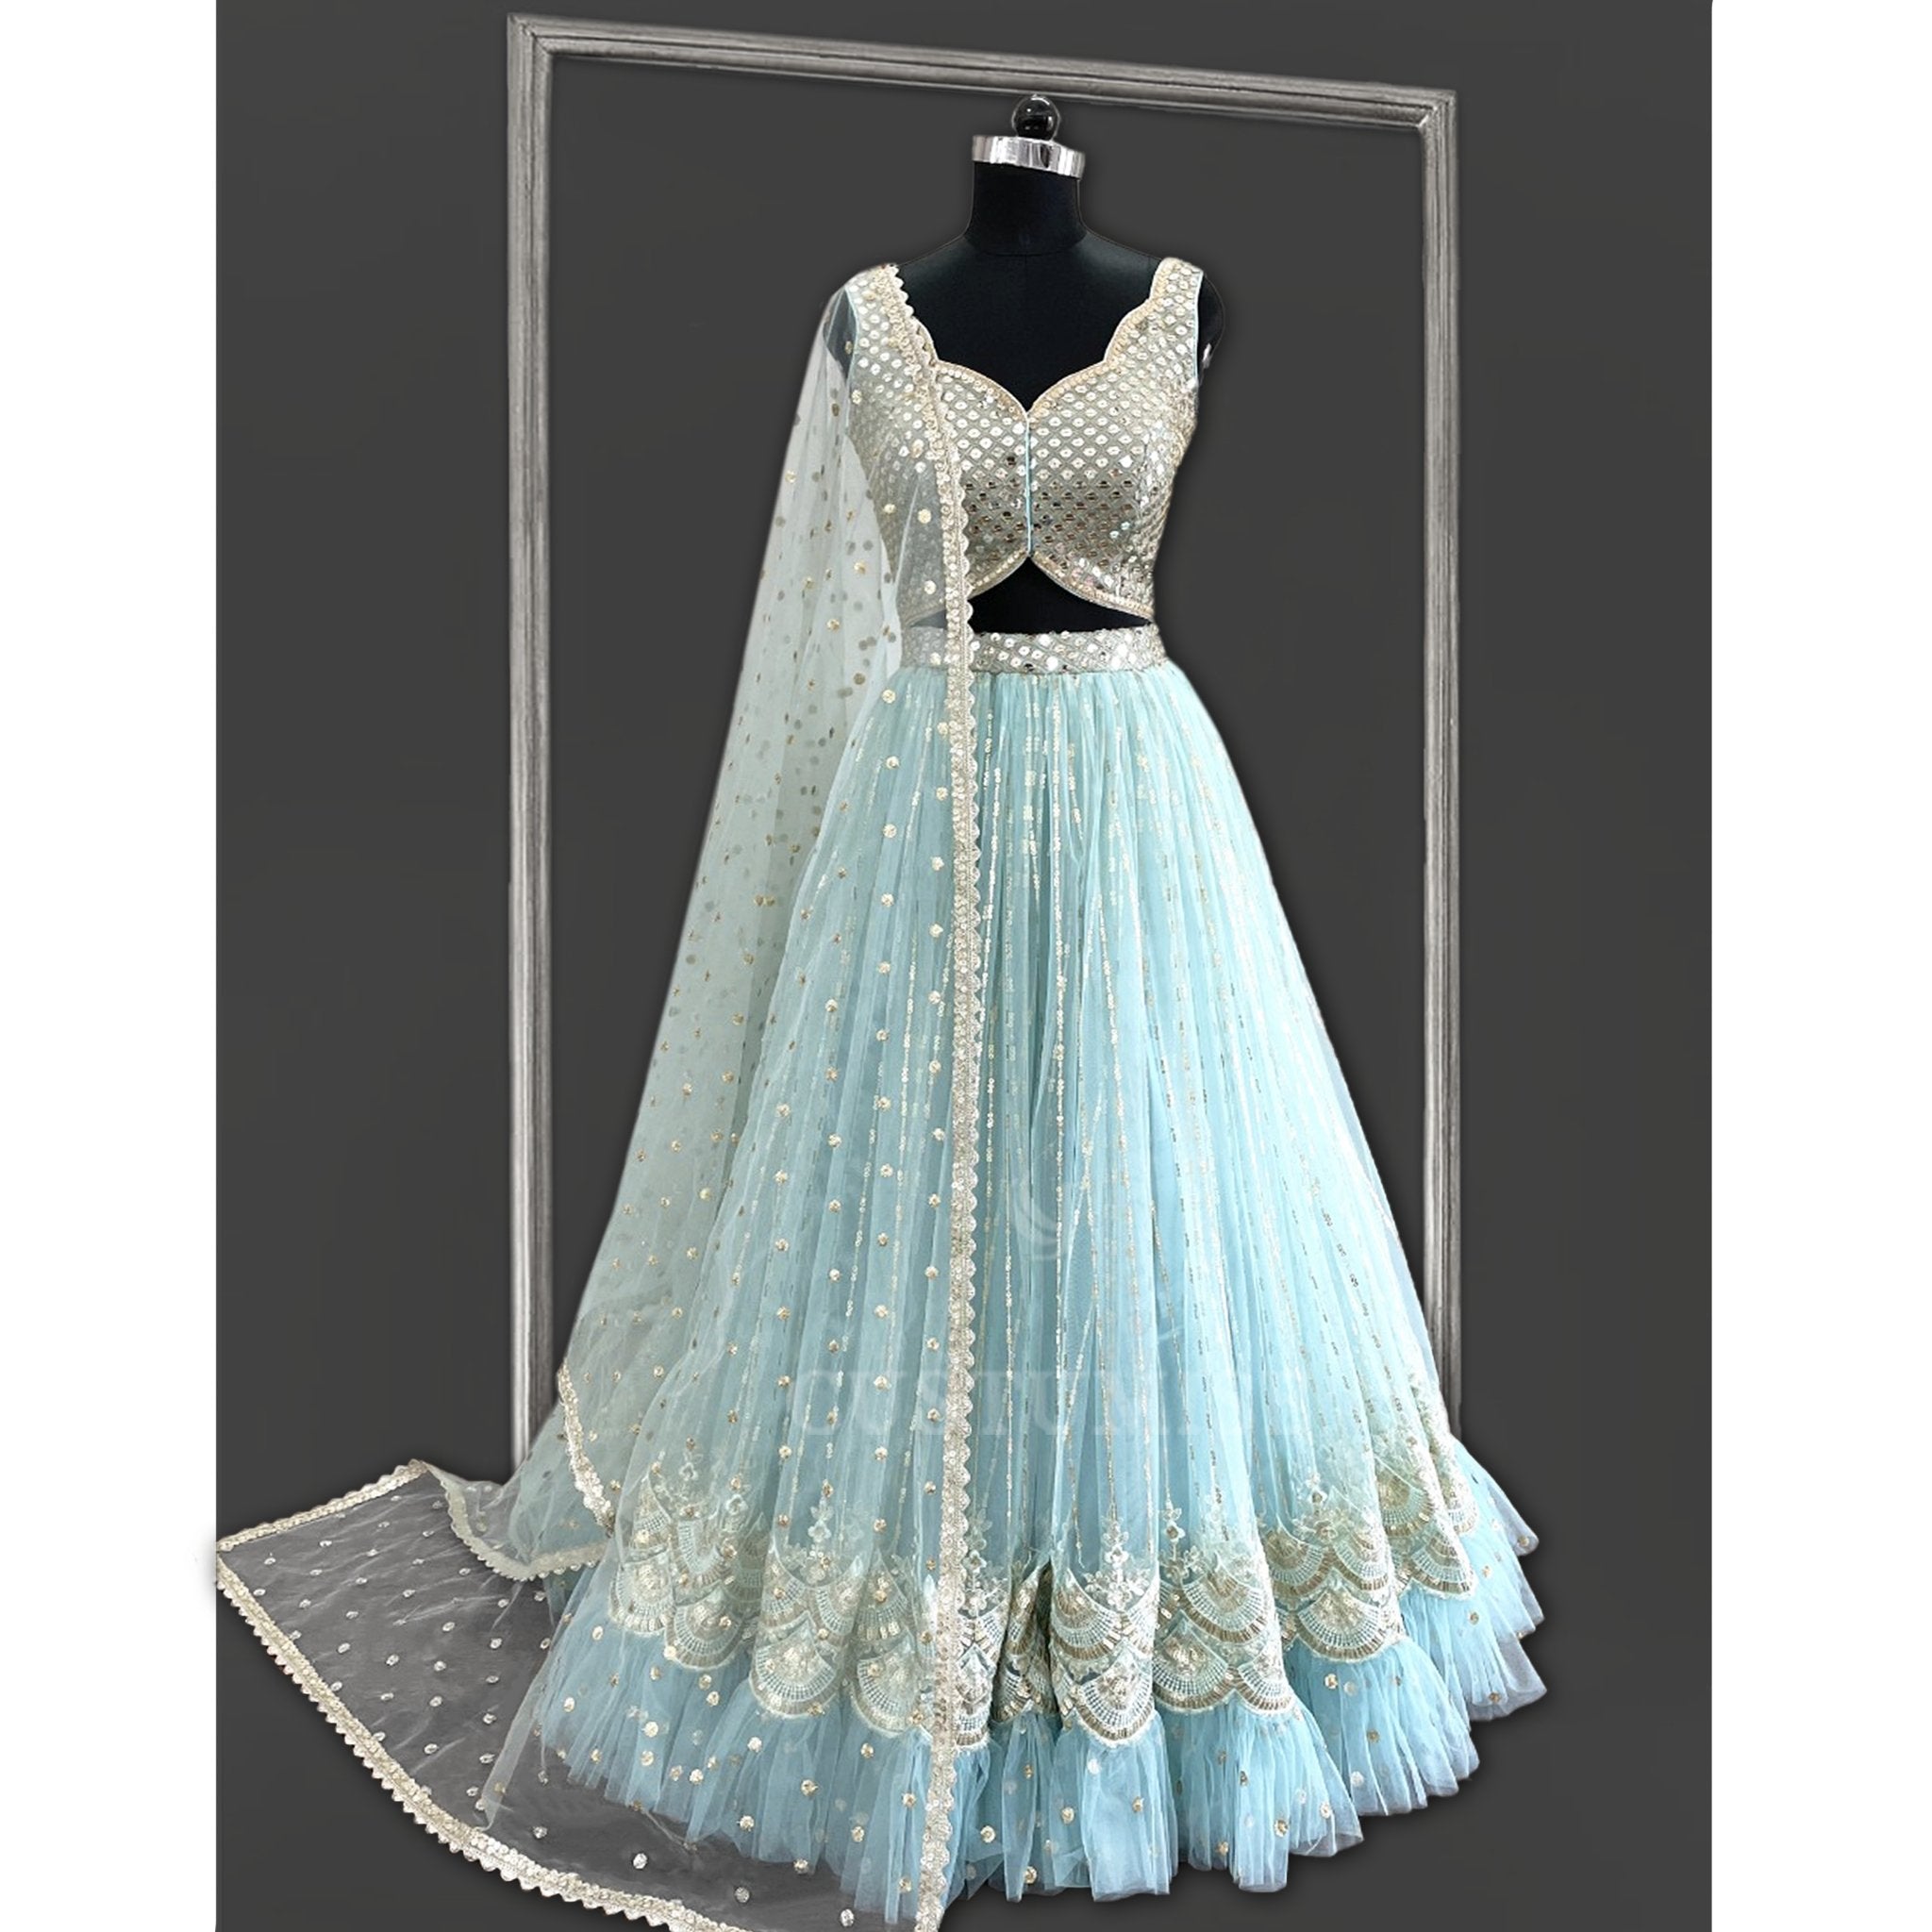 Powder Blue Lehenga set - Indian Designer Bridal Wedding Outfit